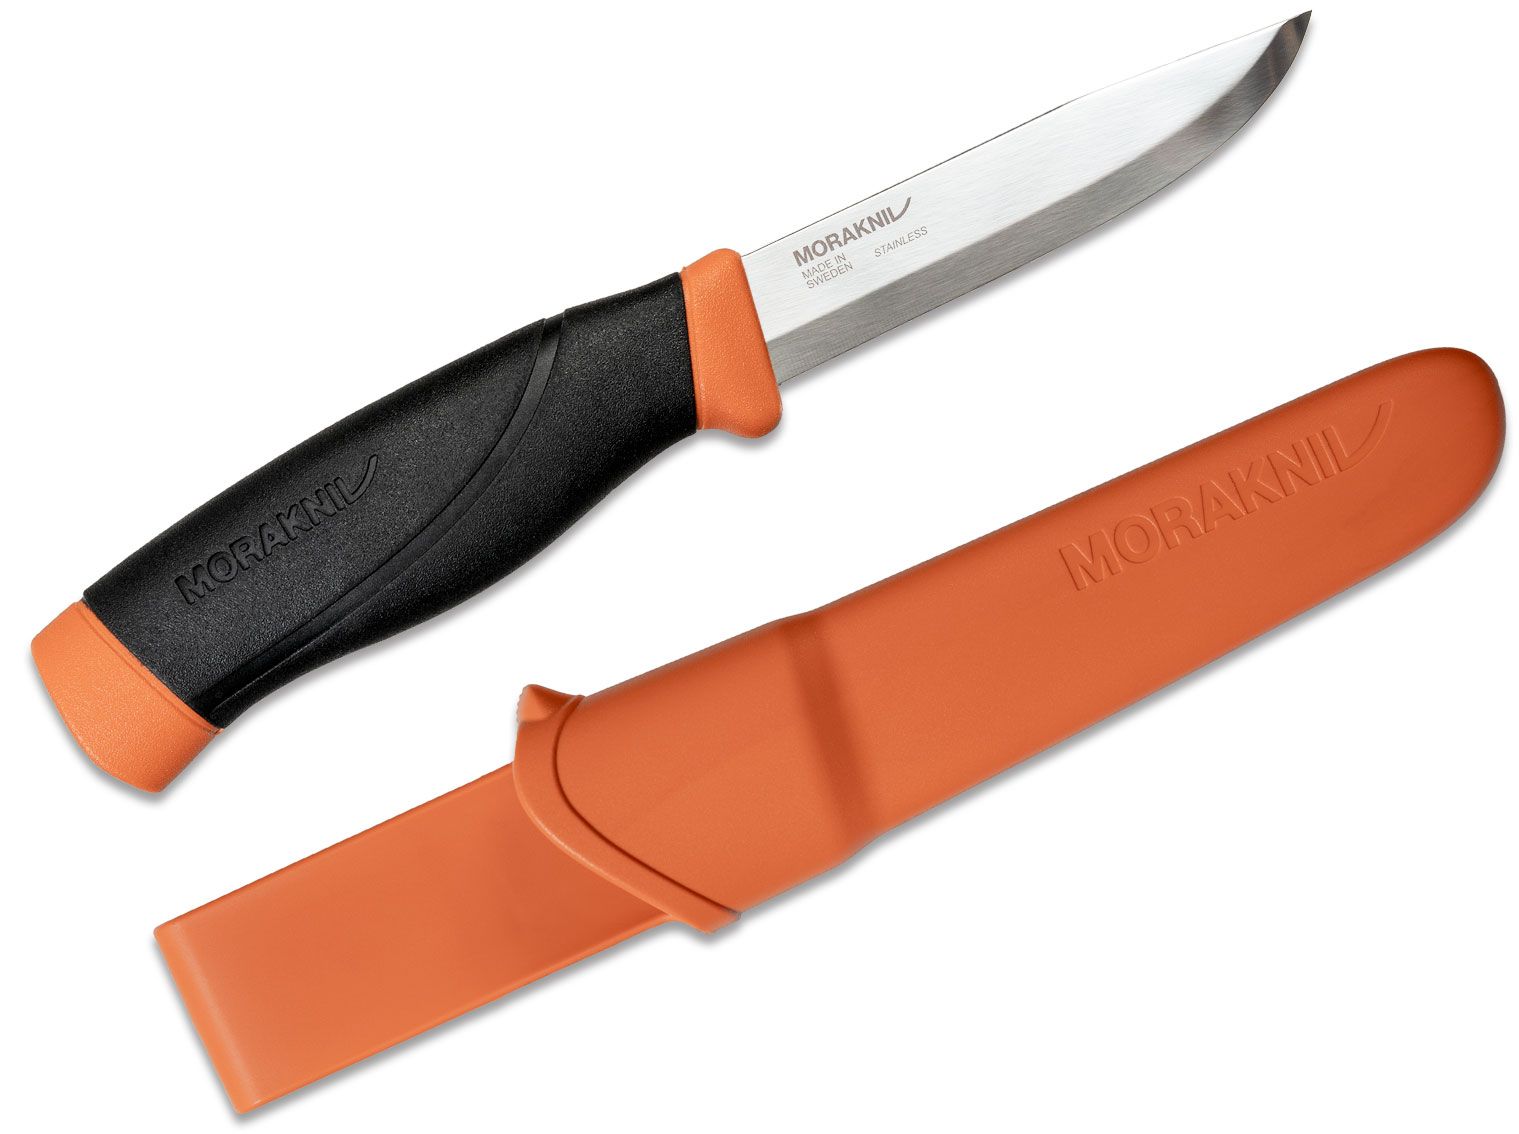 Morakniv Companion Spark Knife with Integral Fire Steel Red Bushcraft Knife  For Sale